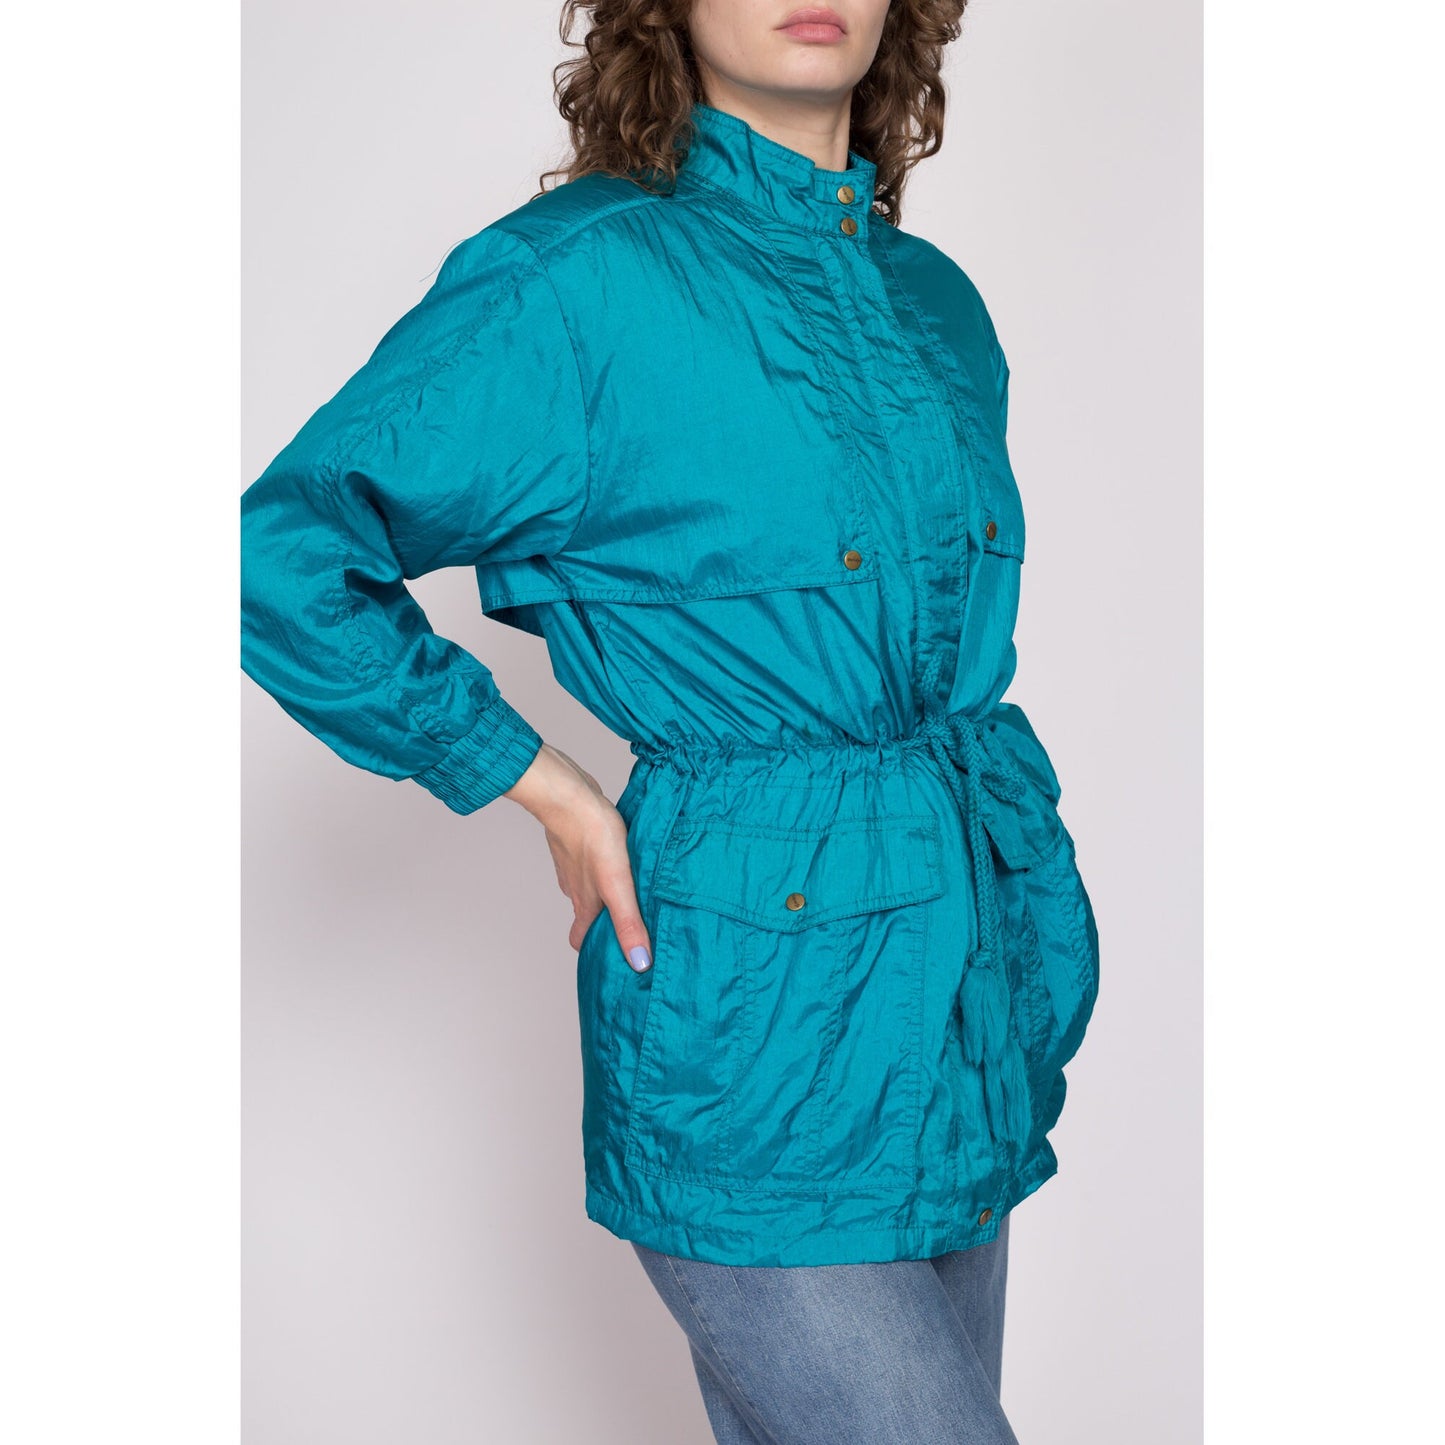 80s Blue Drawstring Waist Windbreaker Jacket - Petite Small to Medium | Vintage Lightweight Zip Up Rain Coat